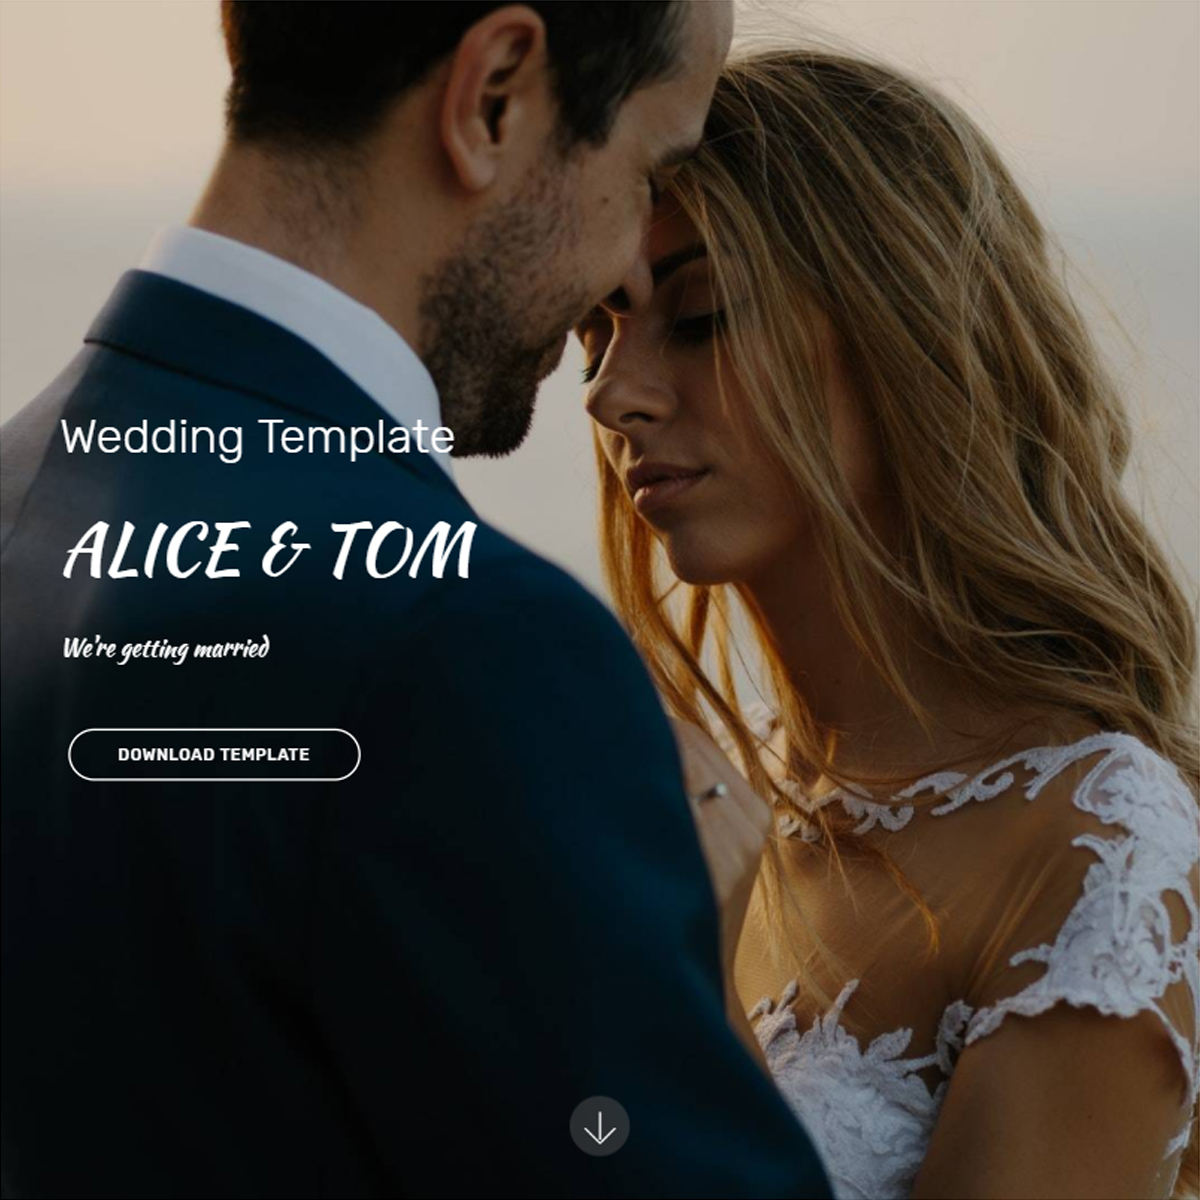 HTML5 Bootstrap Wedding Templates